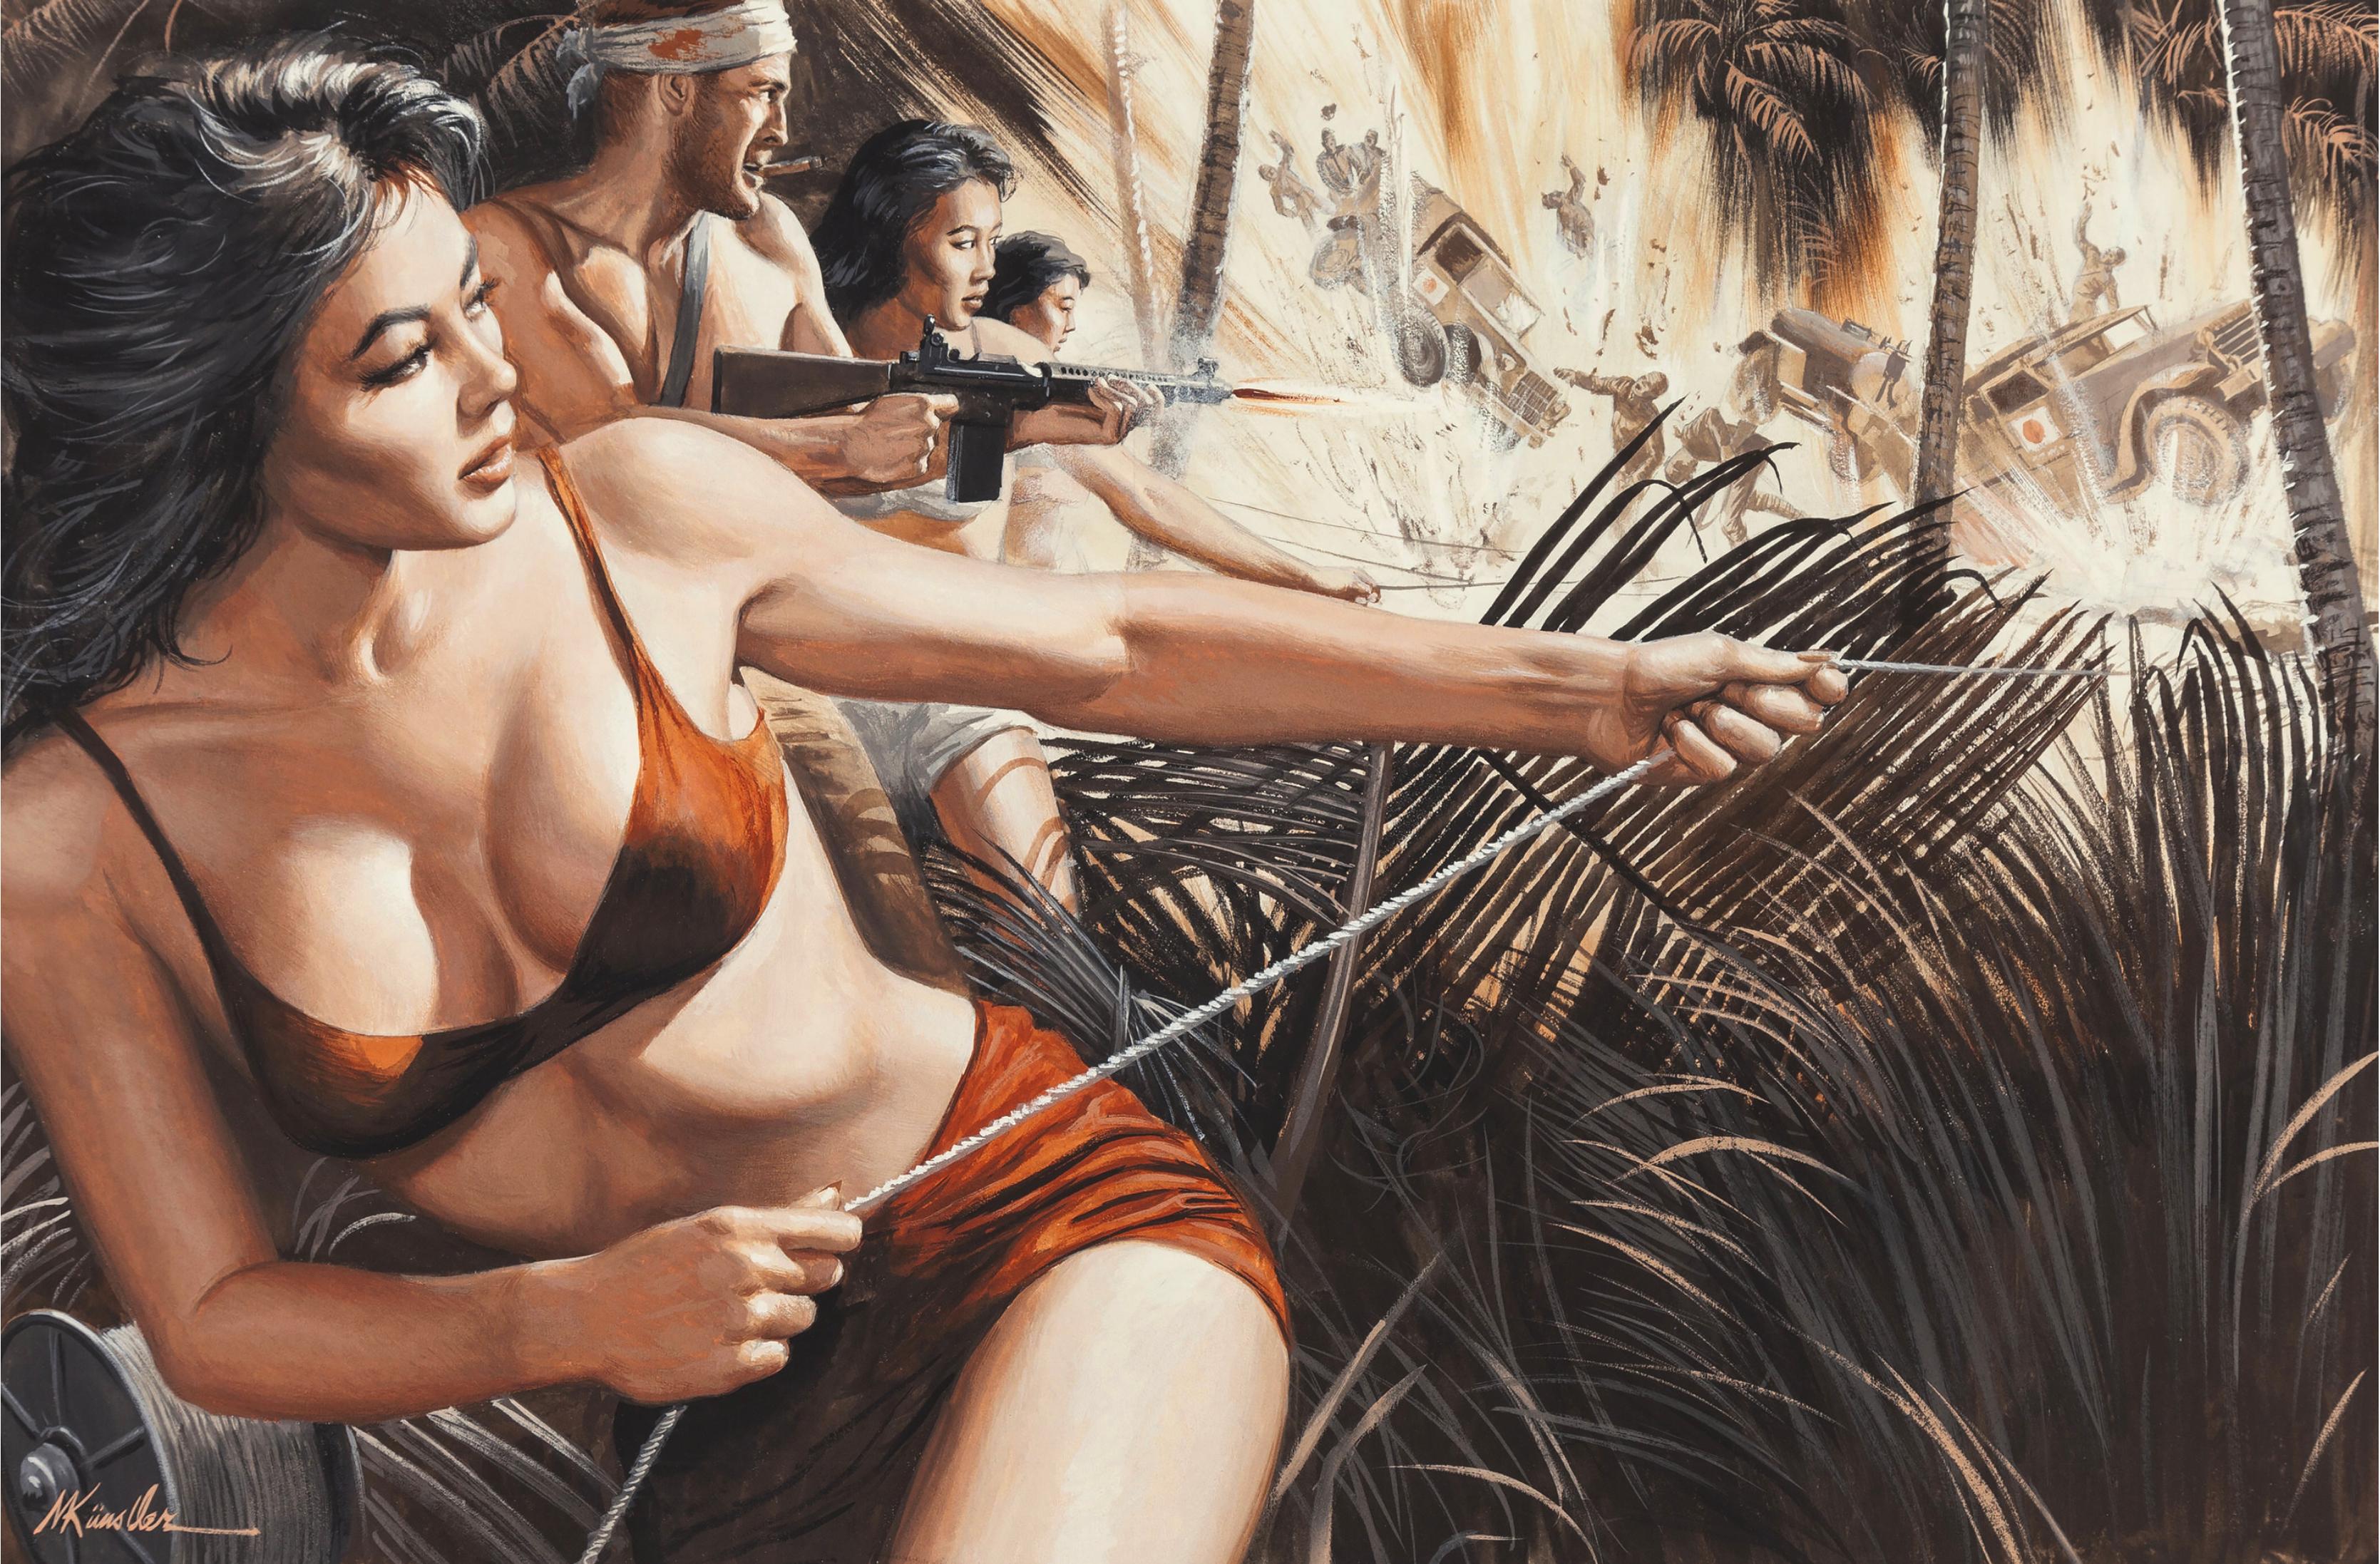 Mort Künstler Nude Painting - G. I. Tiger-Bandit of Saipan, Combat with Bikini Women and Explosions 